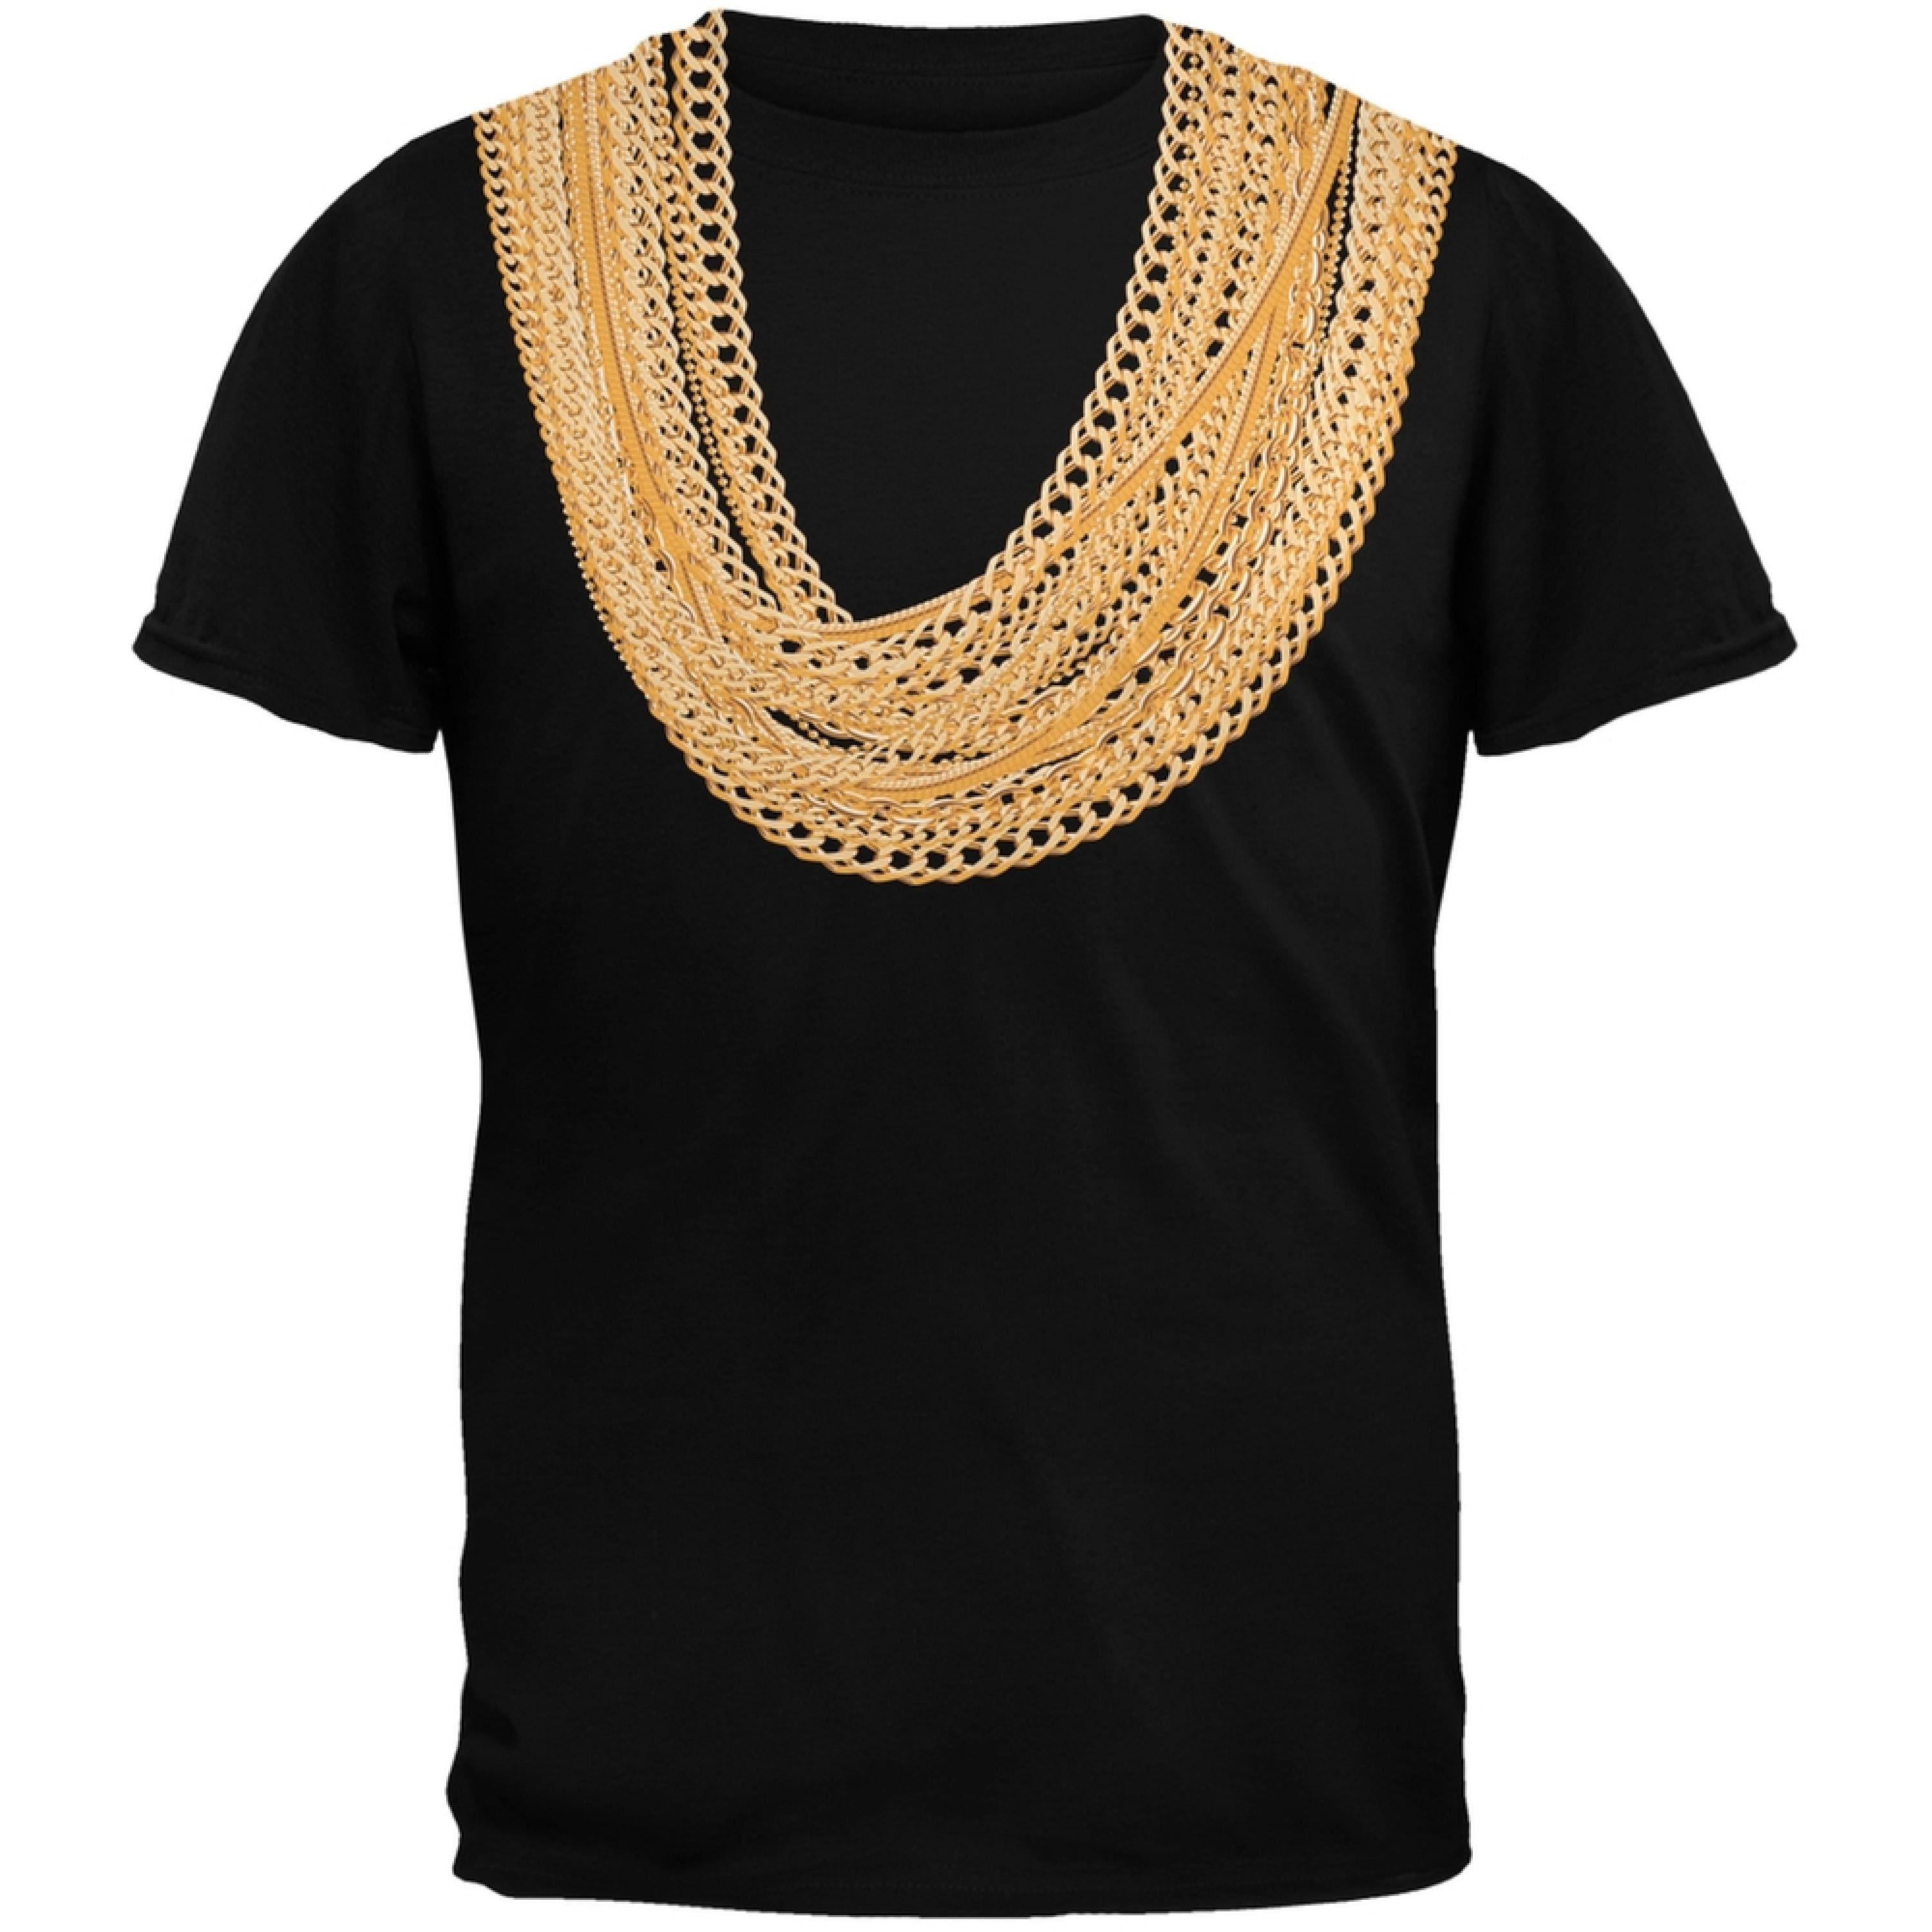 Job offer retail Sovereign Gold Chains Black Adult T-Shirt - Large - Walmart.com